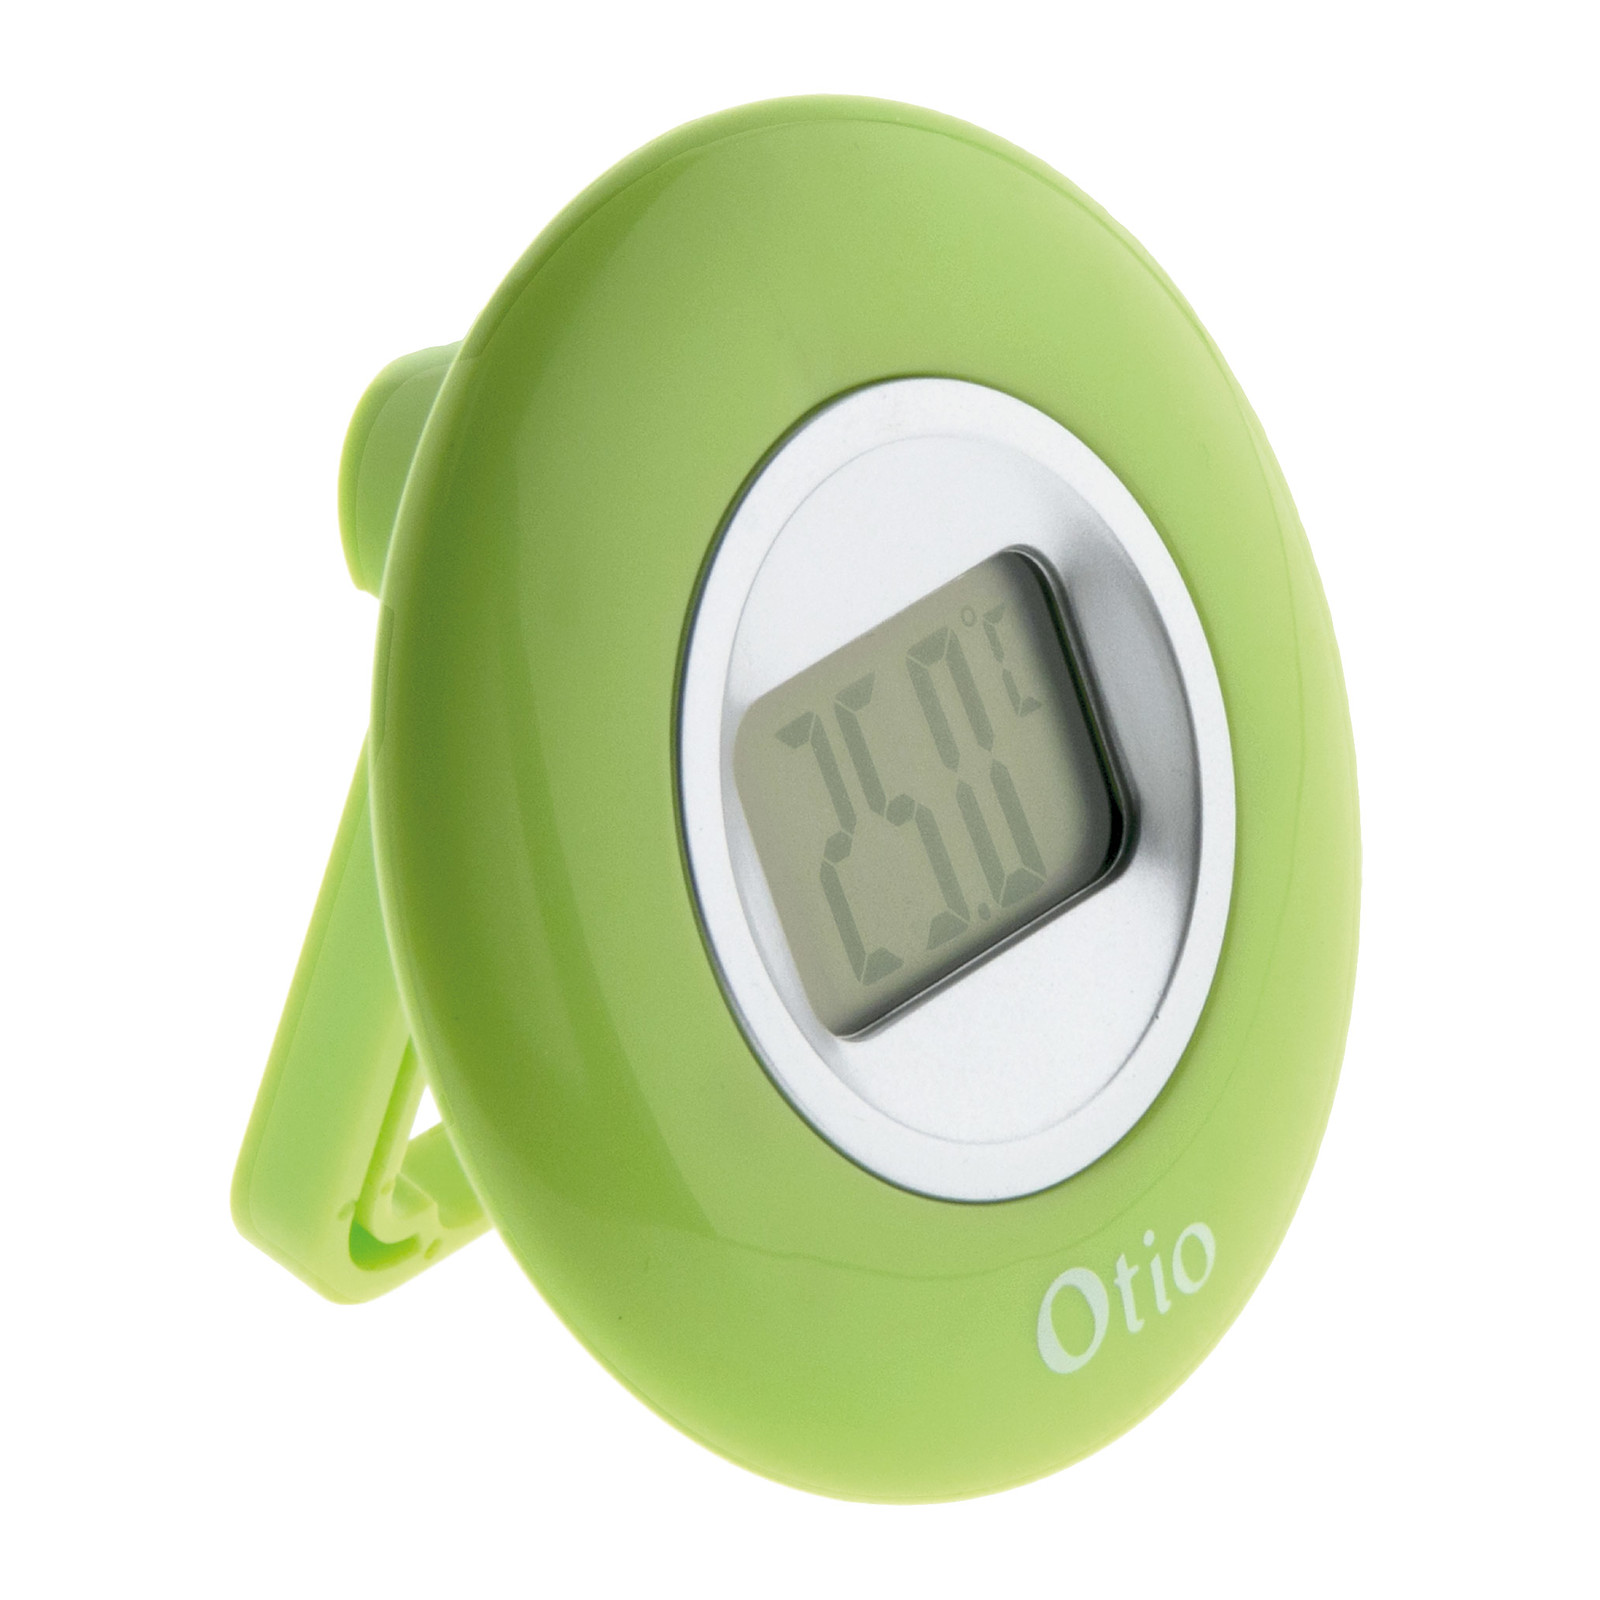 Otio-Thermomètre interieur a  ecran LCD - Vert - Otio - Station Meteo Otio